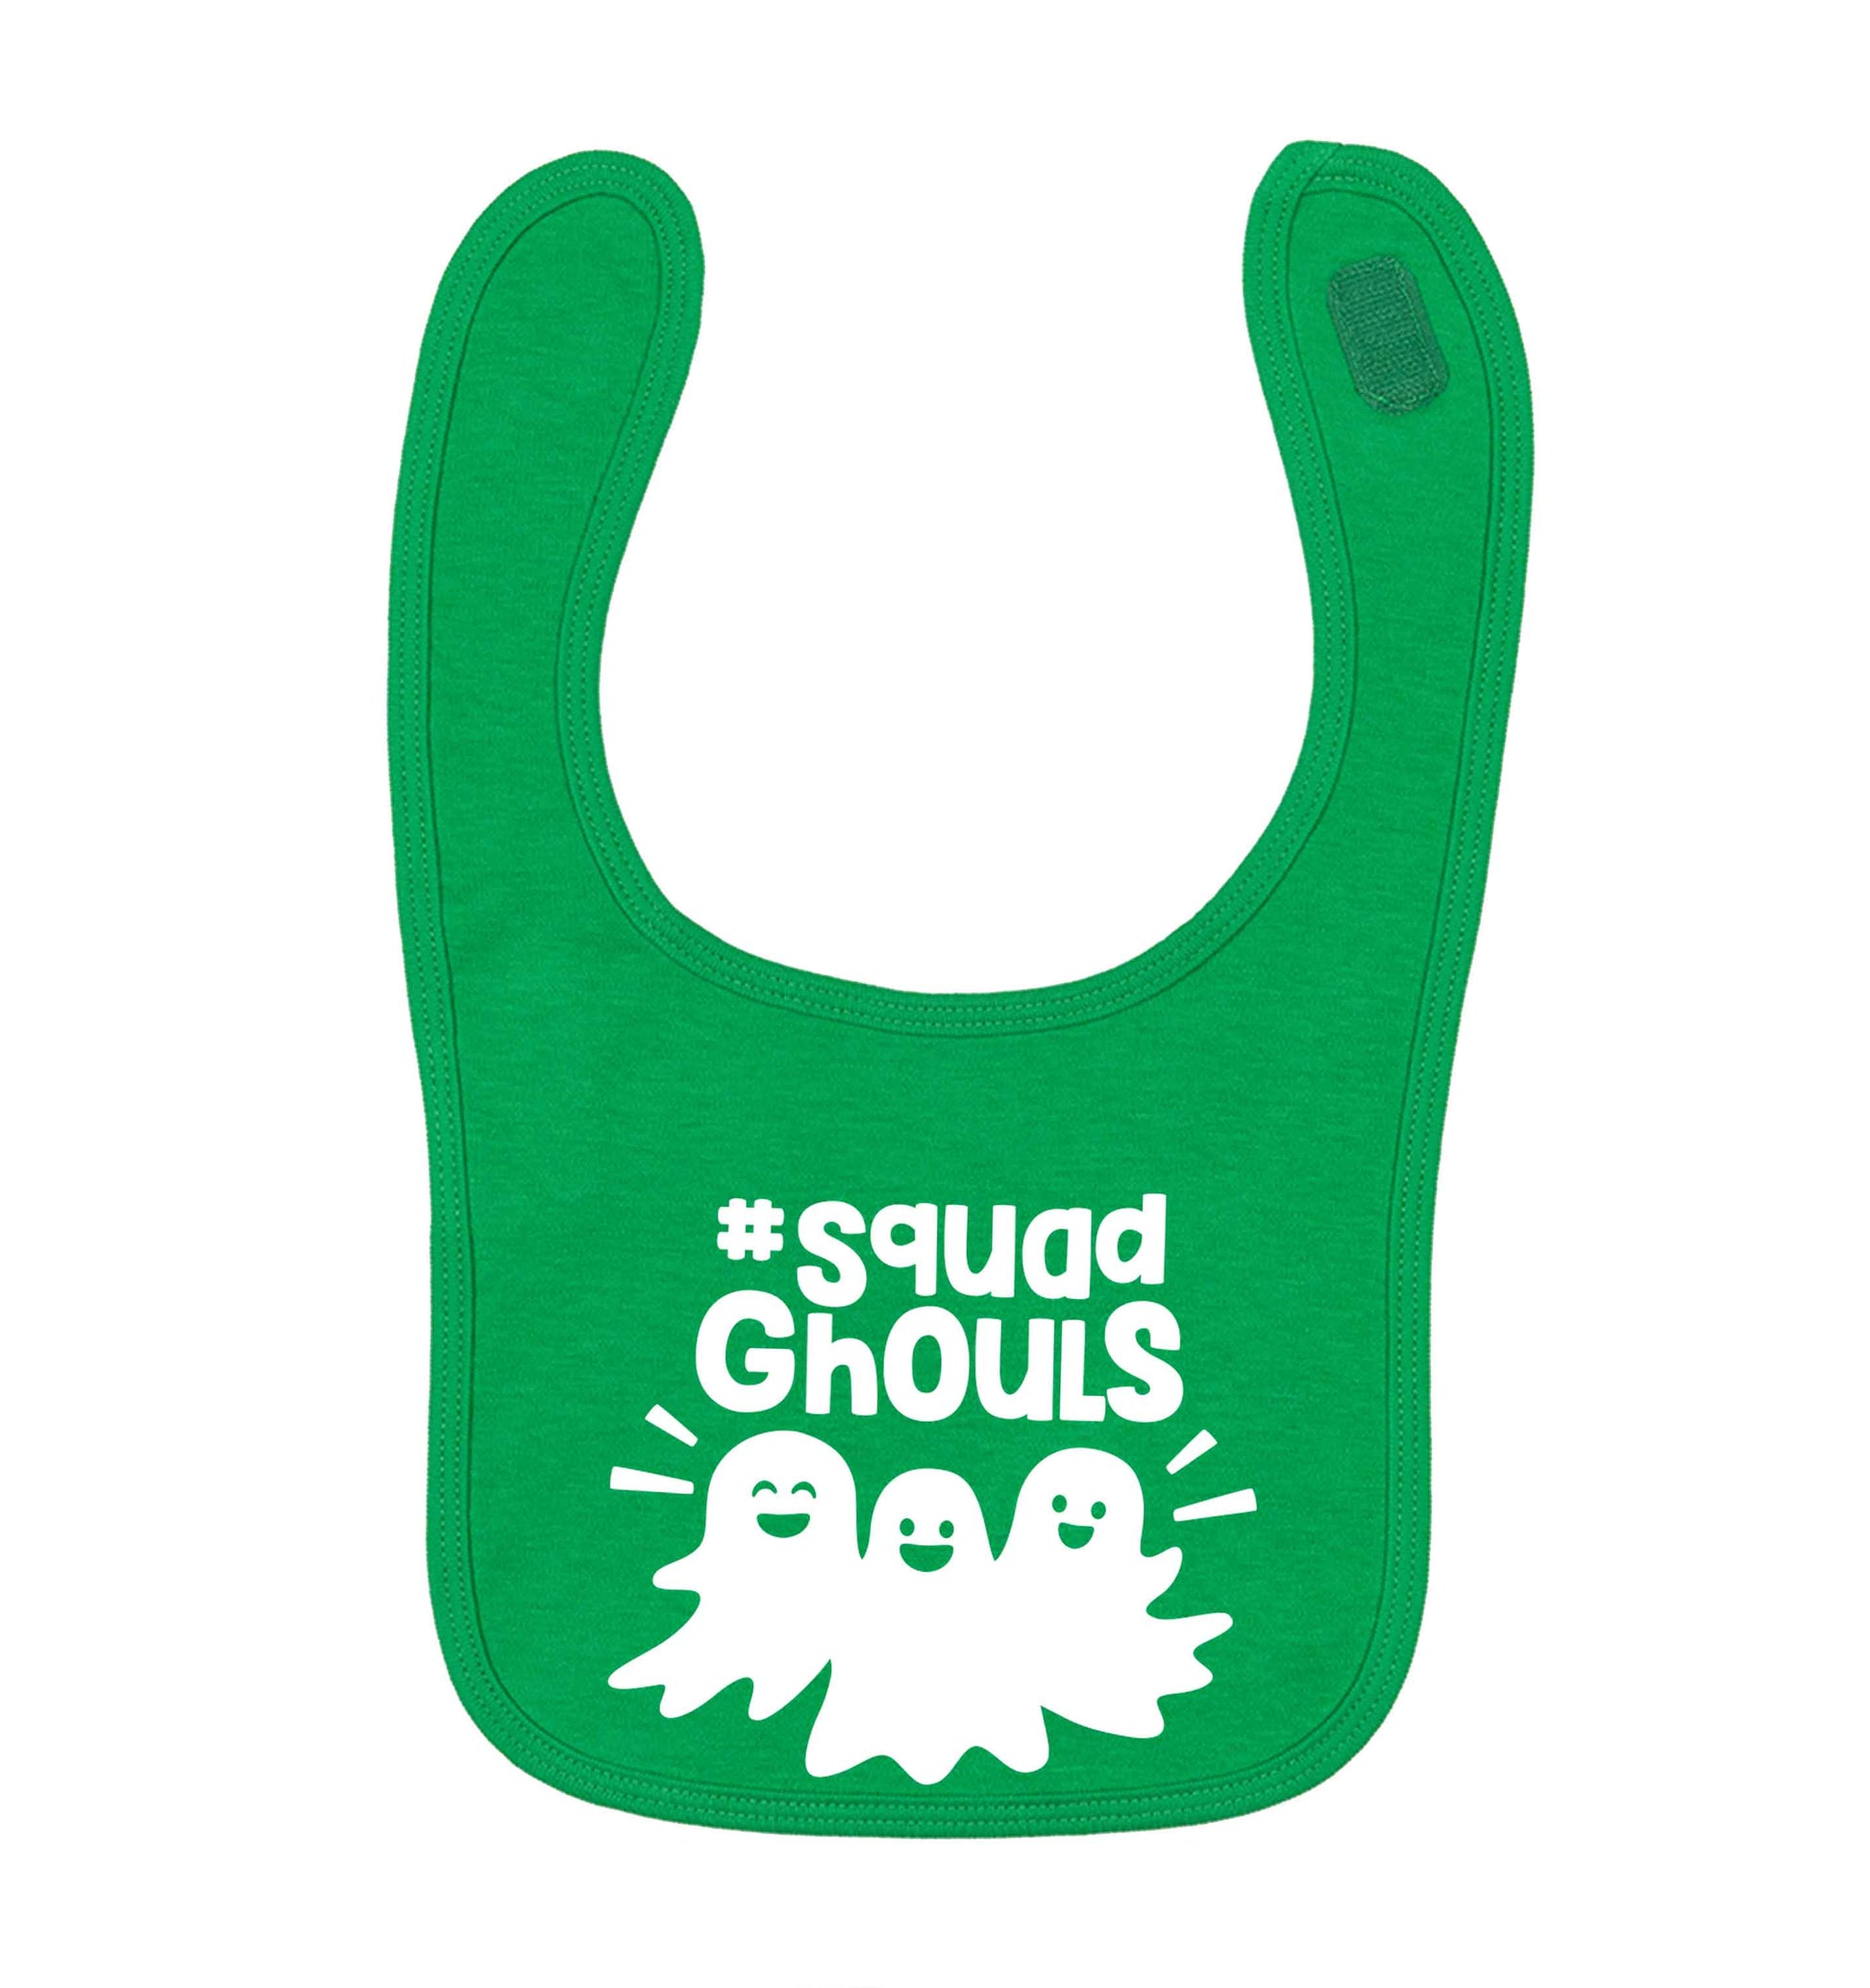 Squad ghouls Kit green baby bib